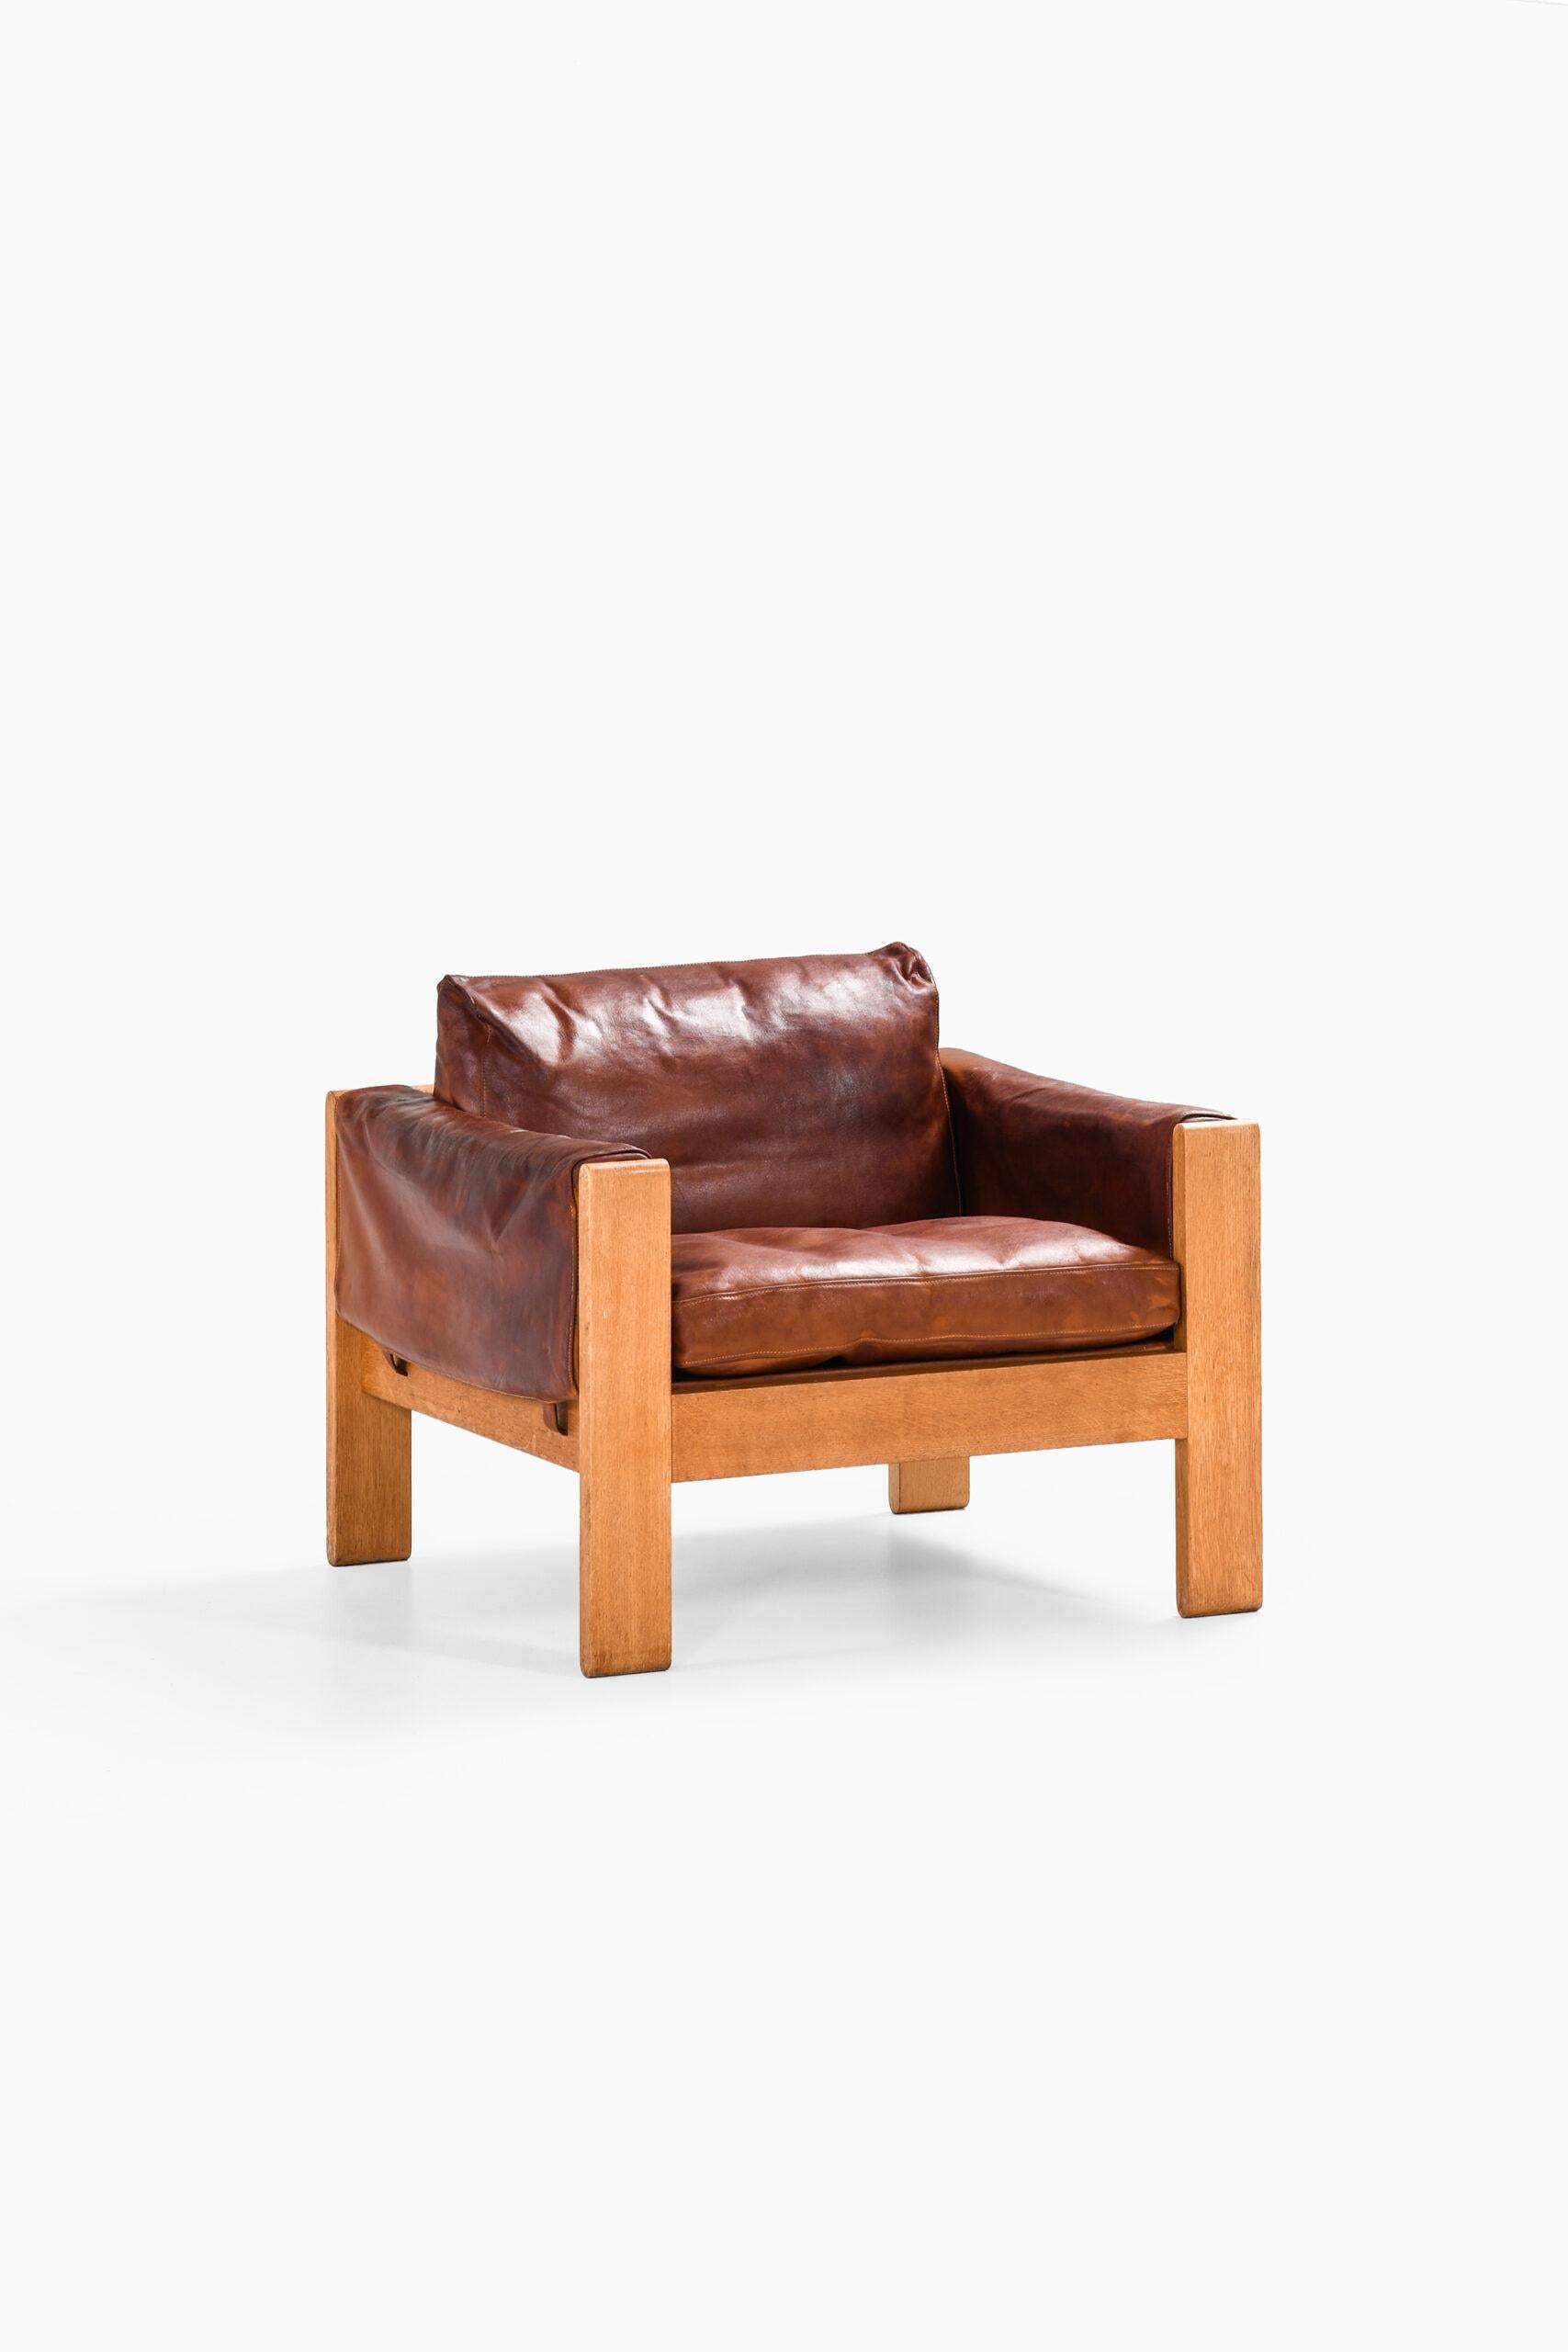 Rare easy chair designed by Erik Ole Jørgensen. Produced by Georg Jørgensen & Son in Denmark.